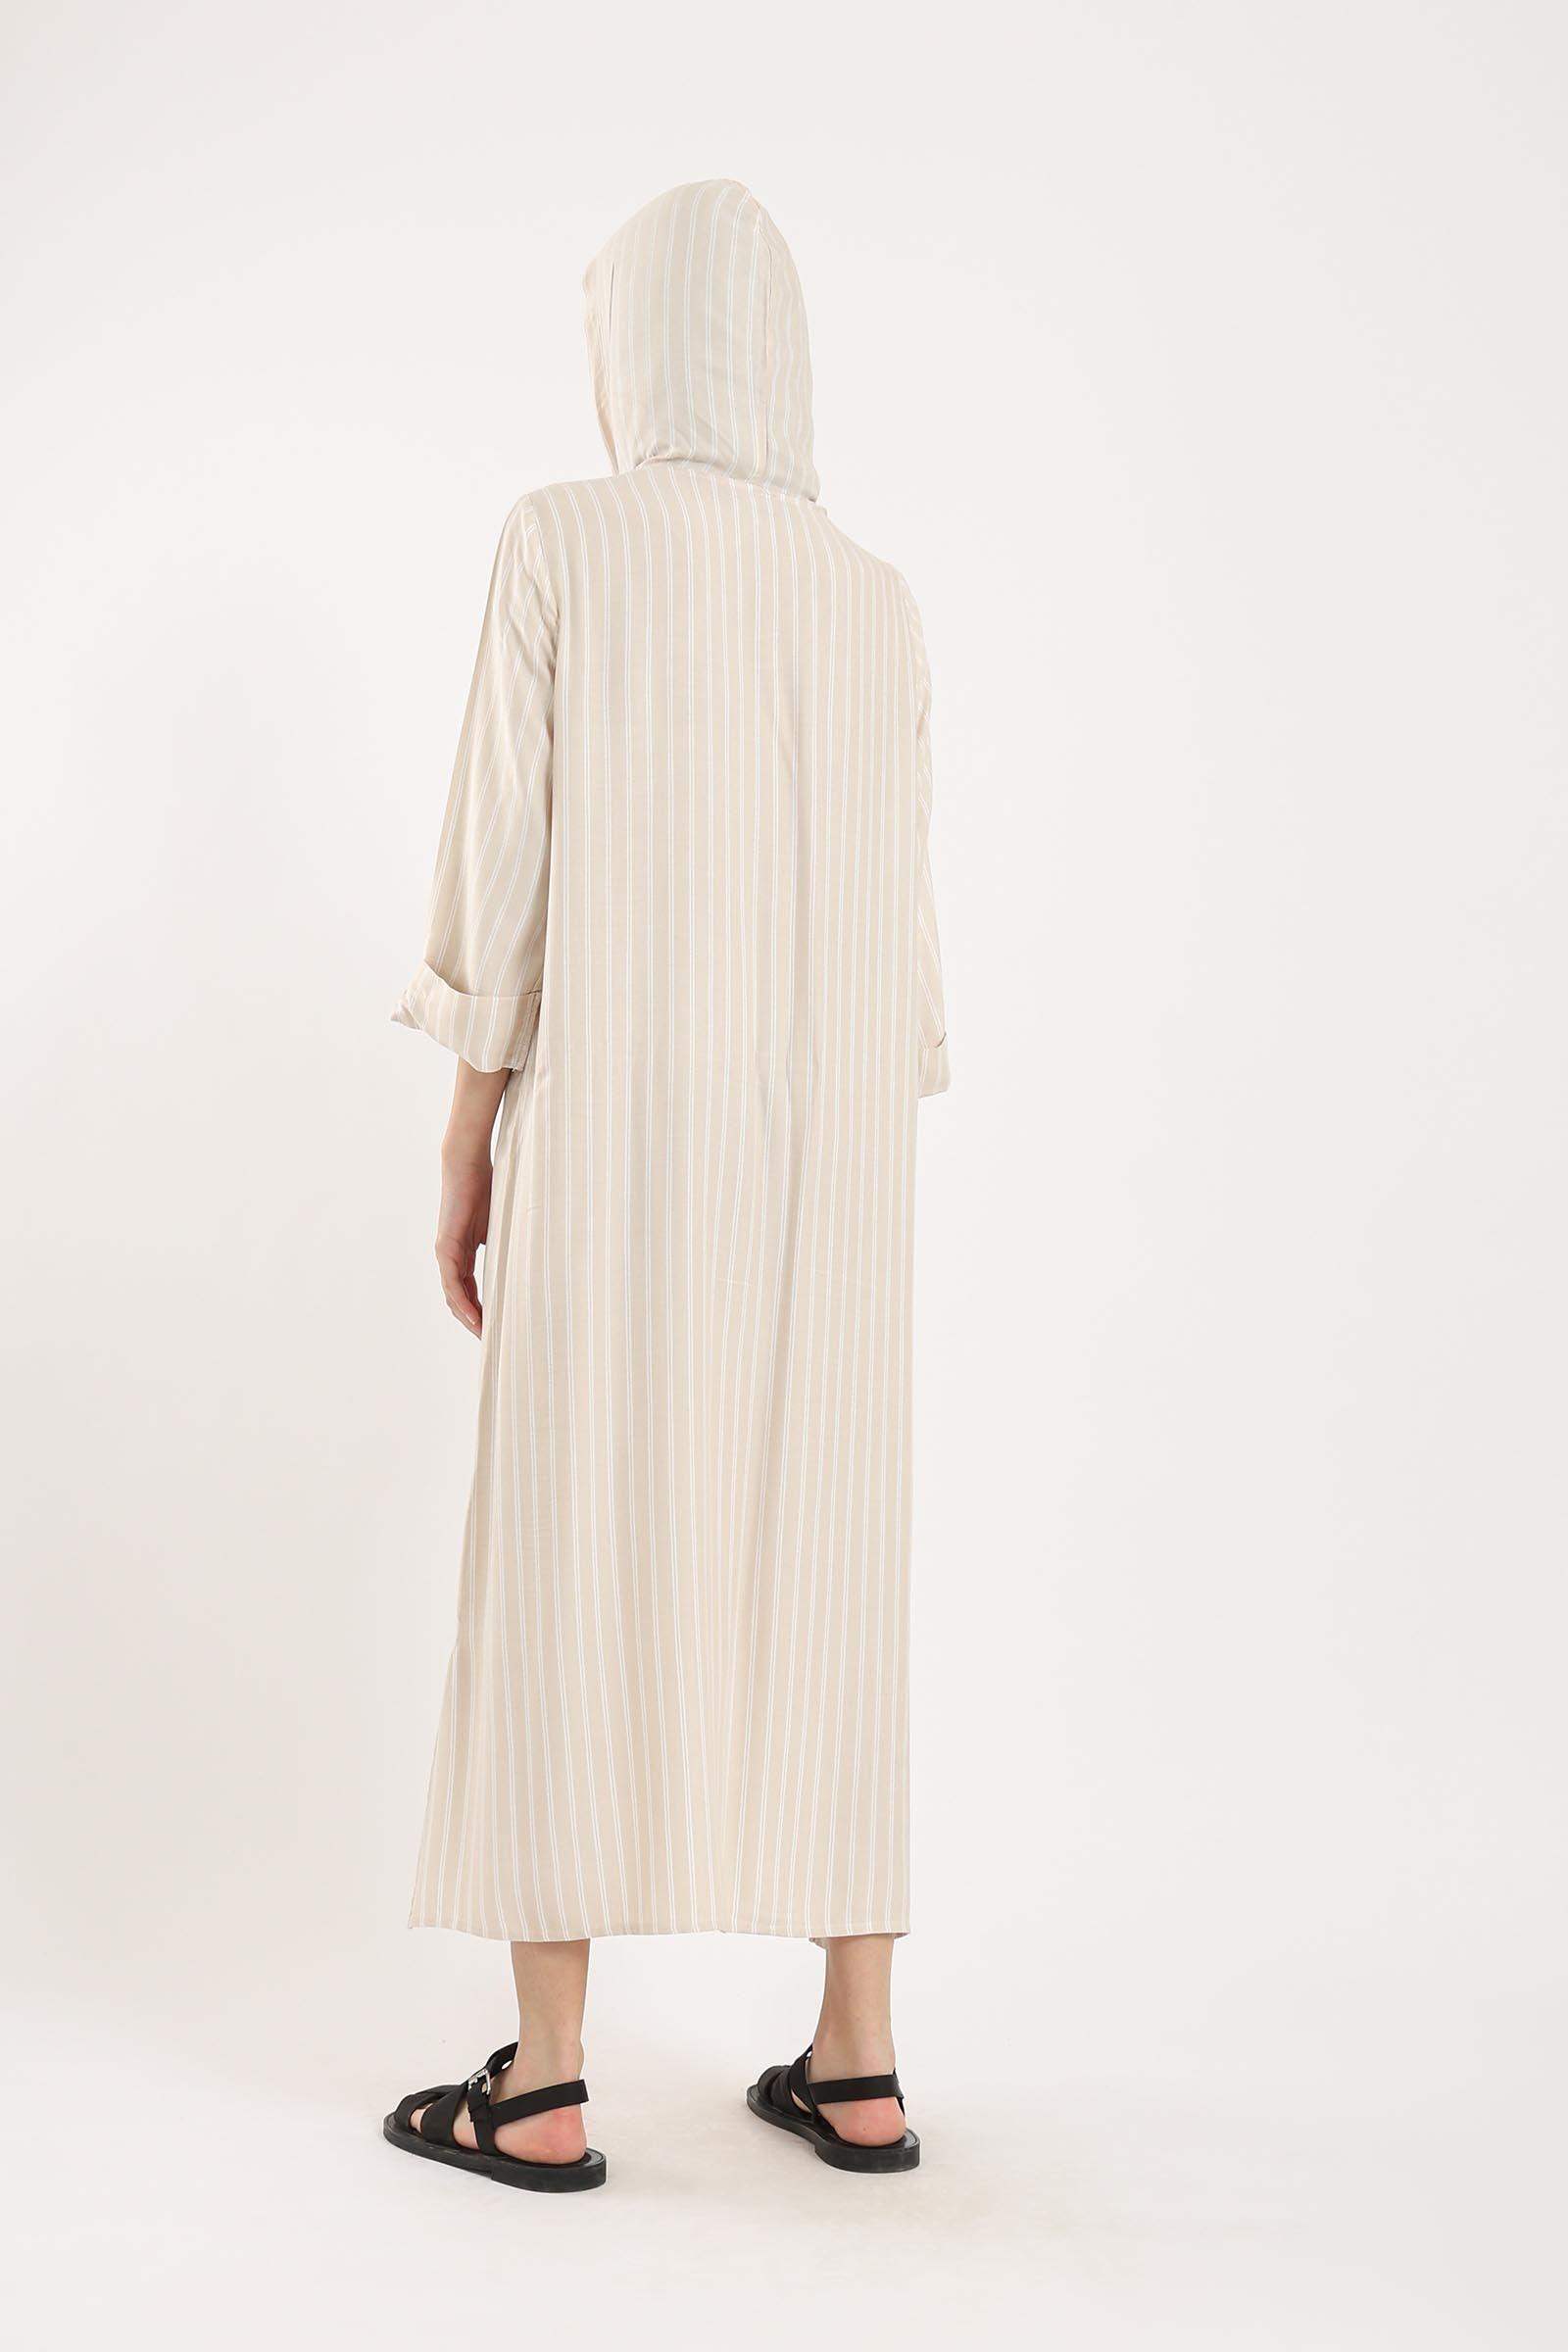 Hooded Striped Dress - Carina - كارينا